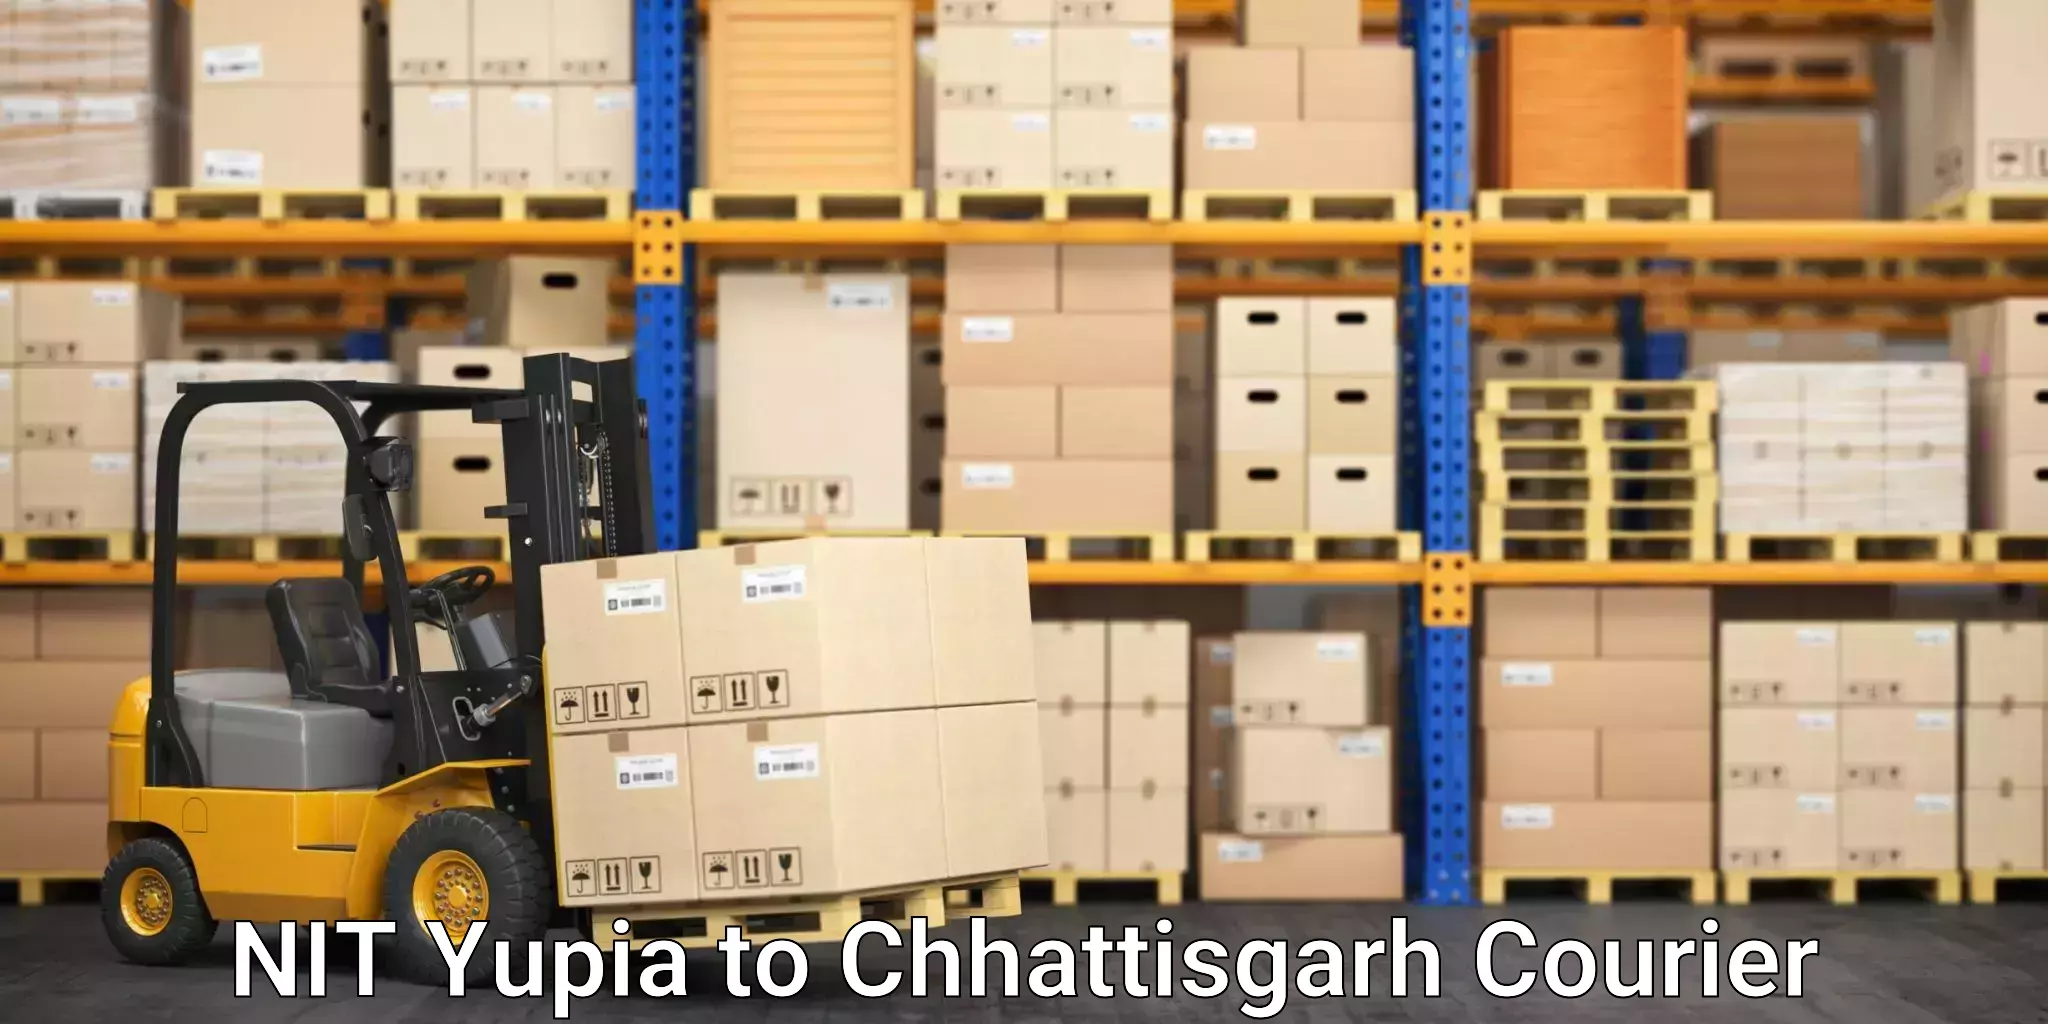 Quality courier services NIT Yupia to Bijapur Chhattisgarh